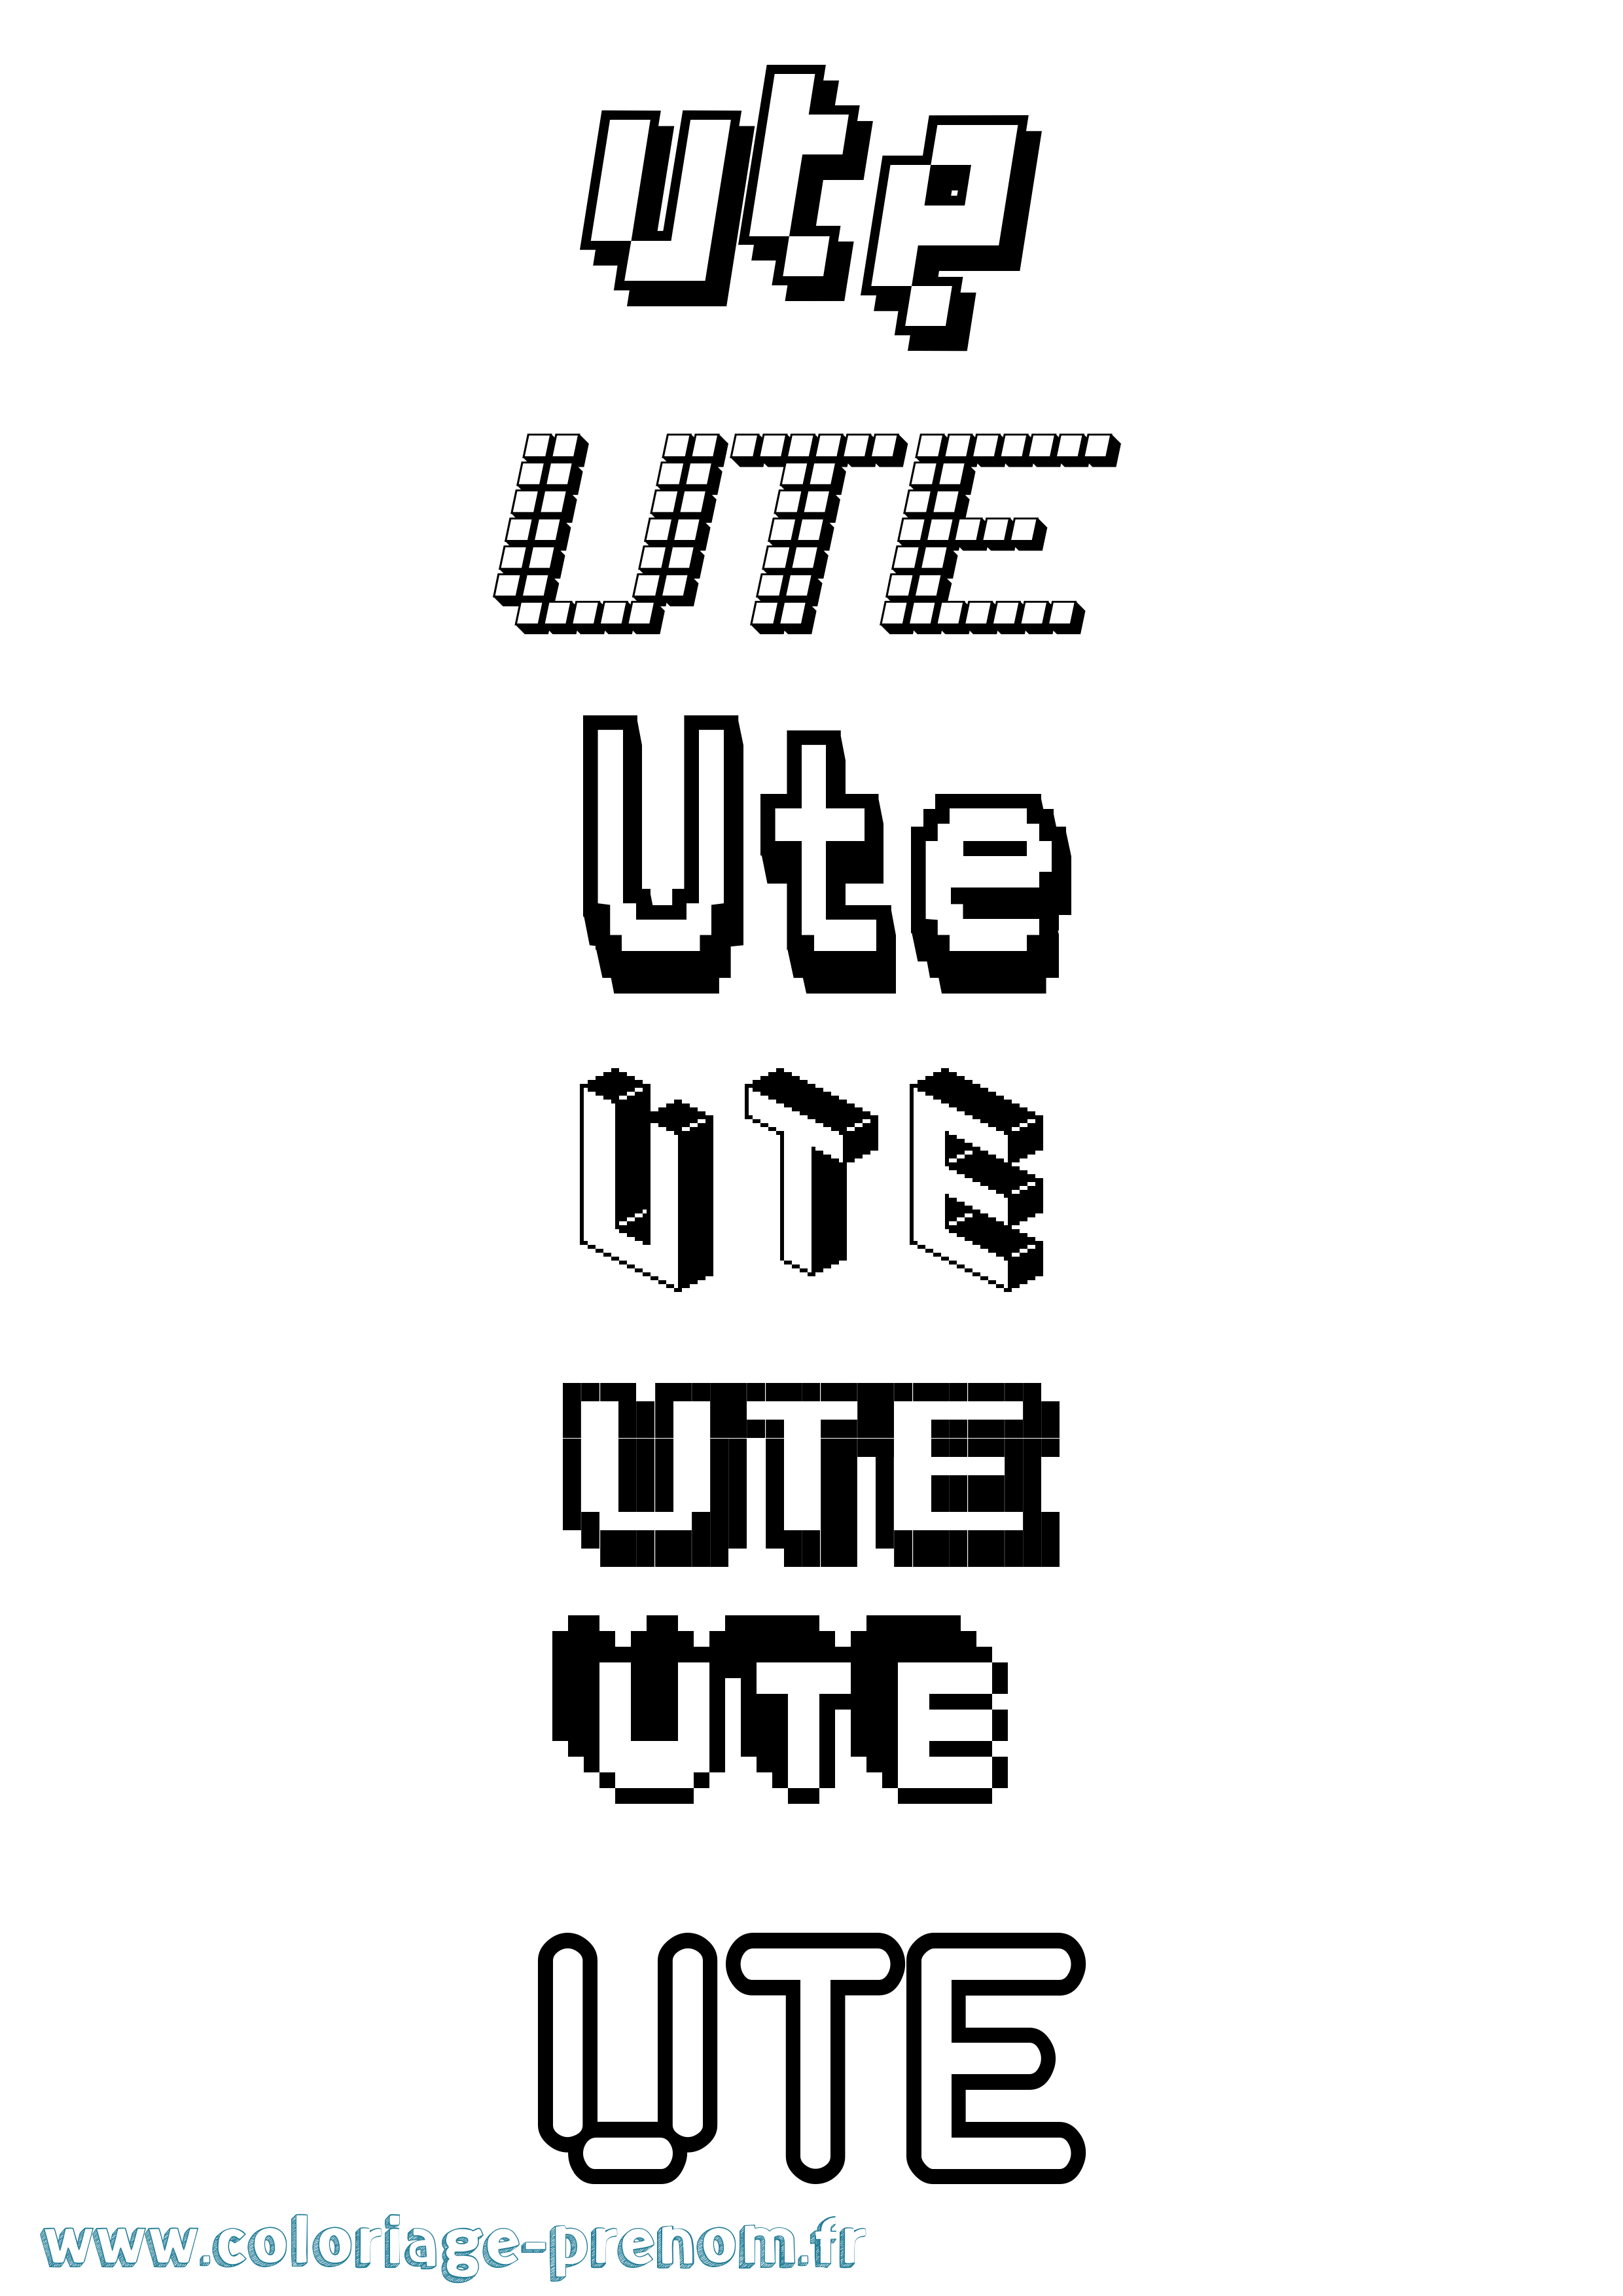 Coloriage prénom Ute Pixel